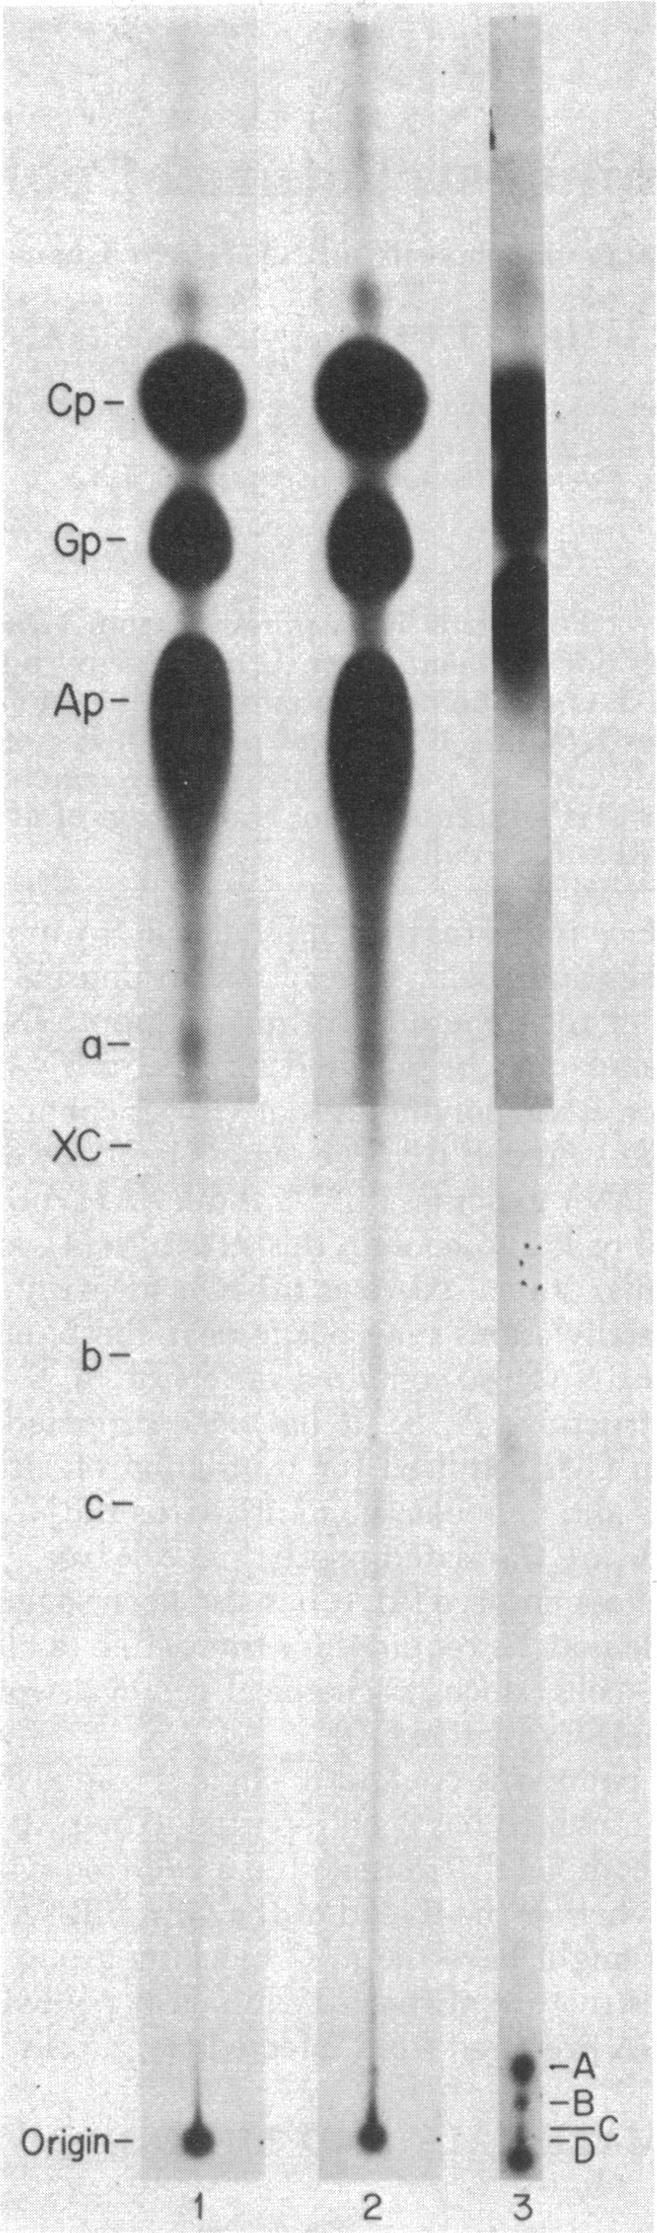 328 Biochemistry: Hewlett et al. Proc. Nat. Acad. Sci. USA 73 (1976) It 00- x AL Cp- Gp- Ap- Fraction number FIG. 1. Sedimentation analysis of poliovirus RNA.